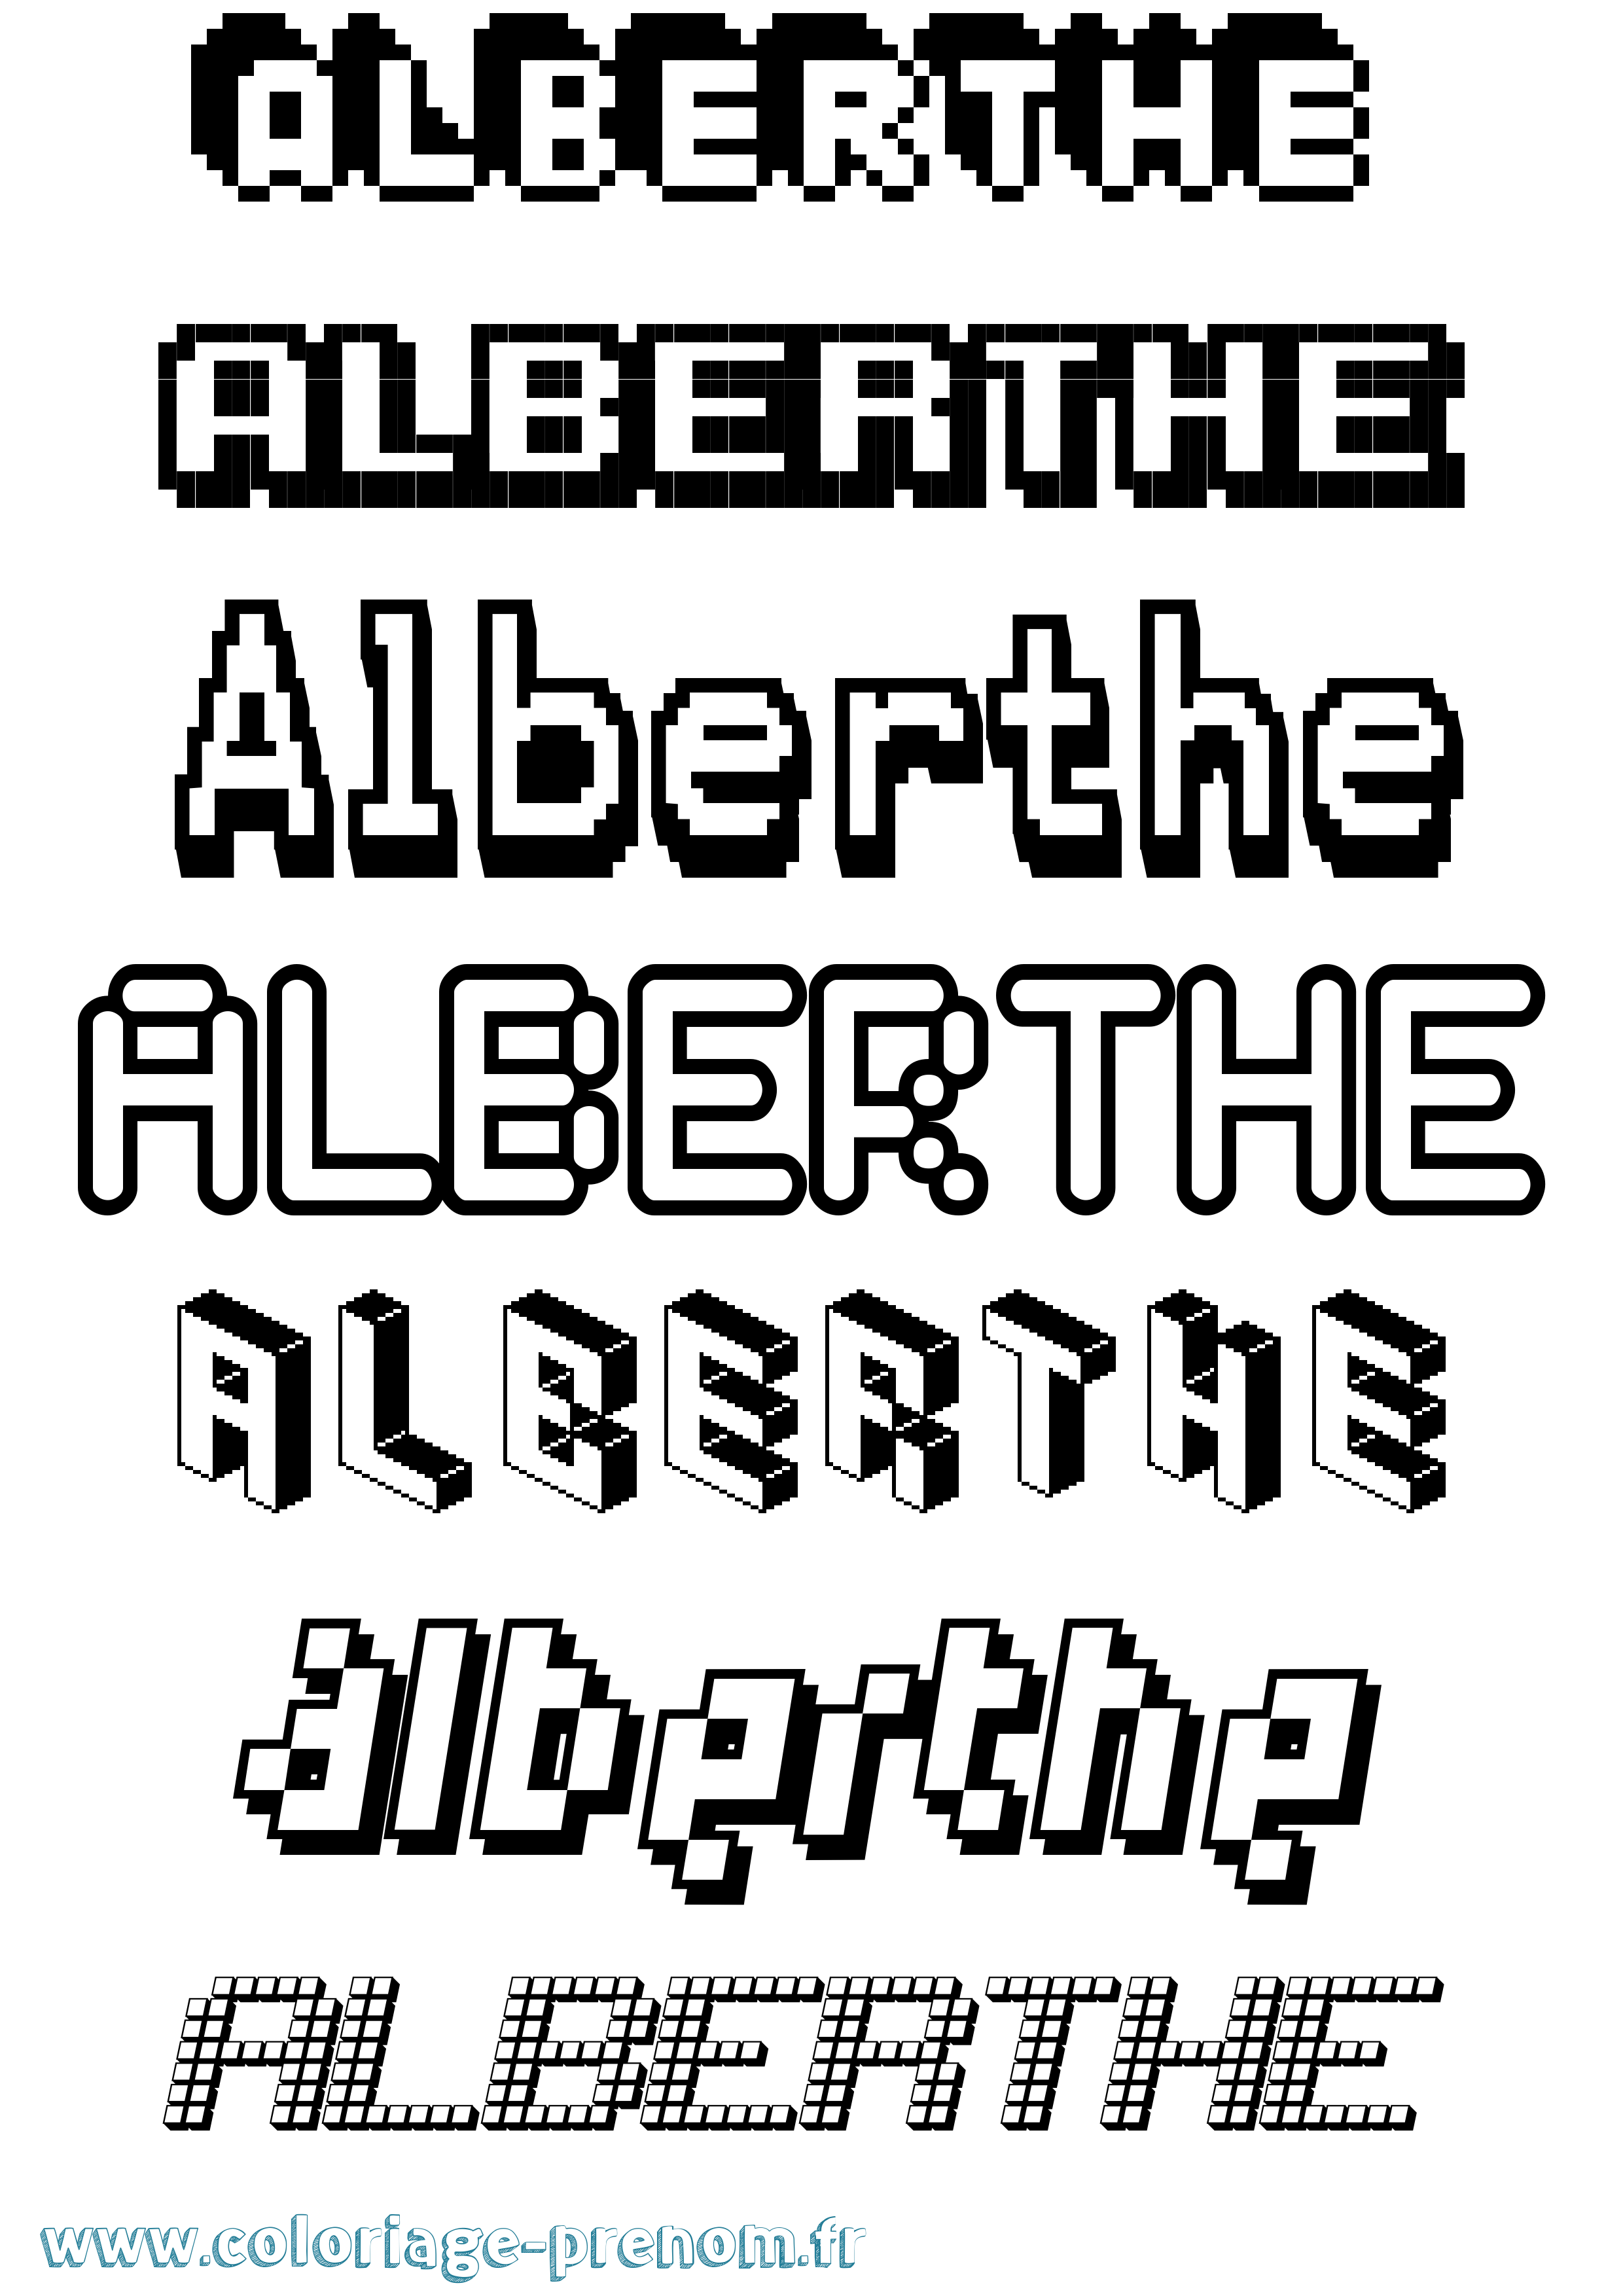 Coloriage prénom Alberthe Pixel